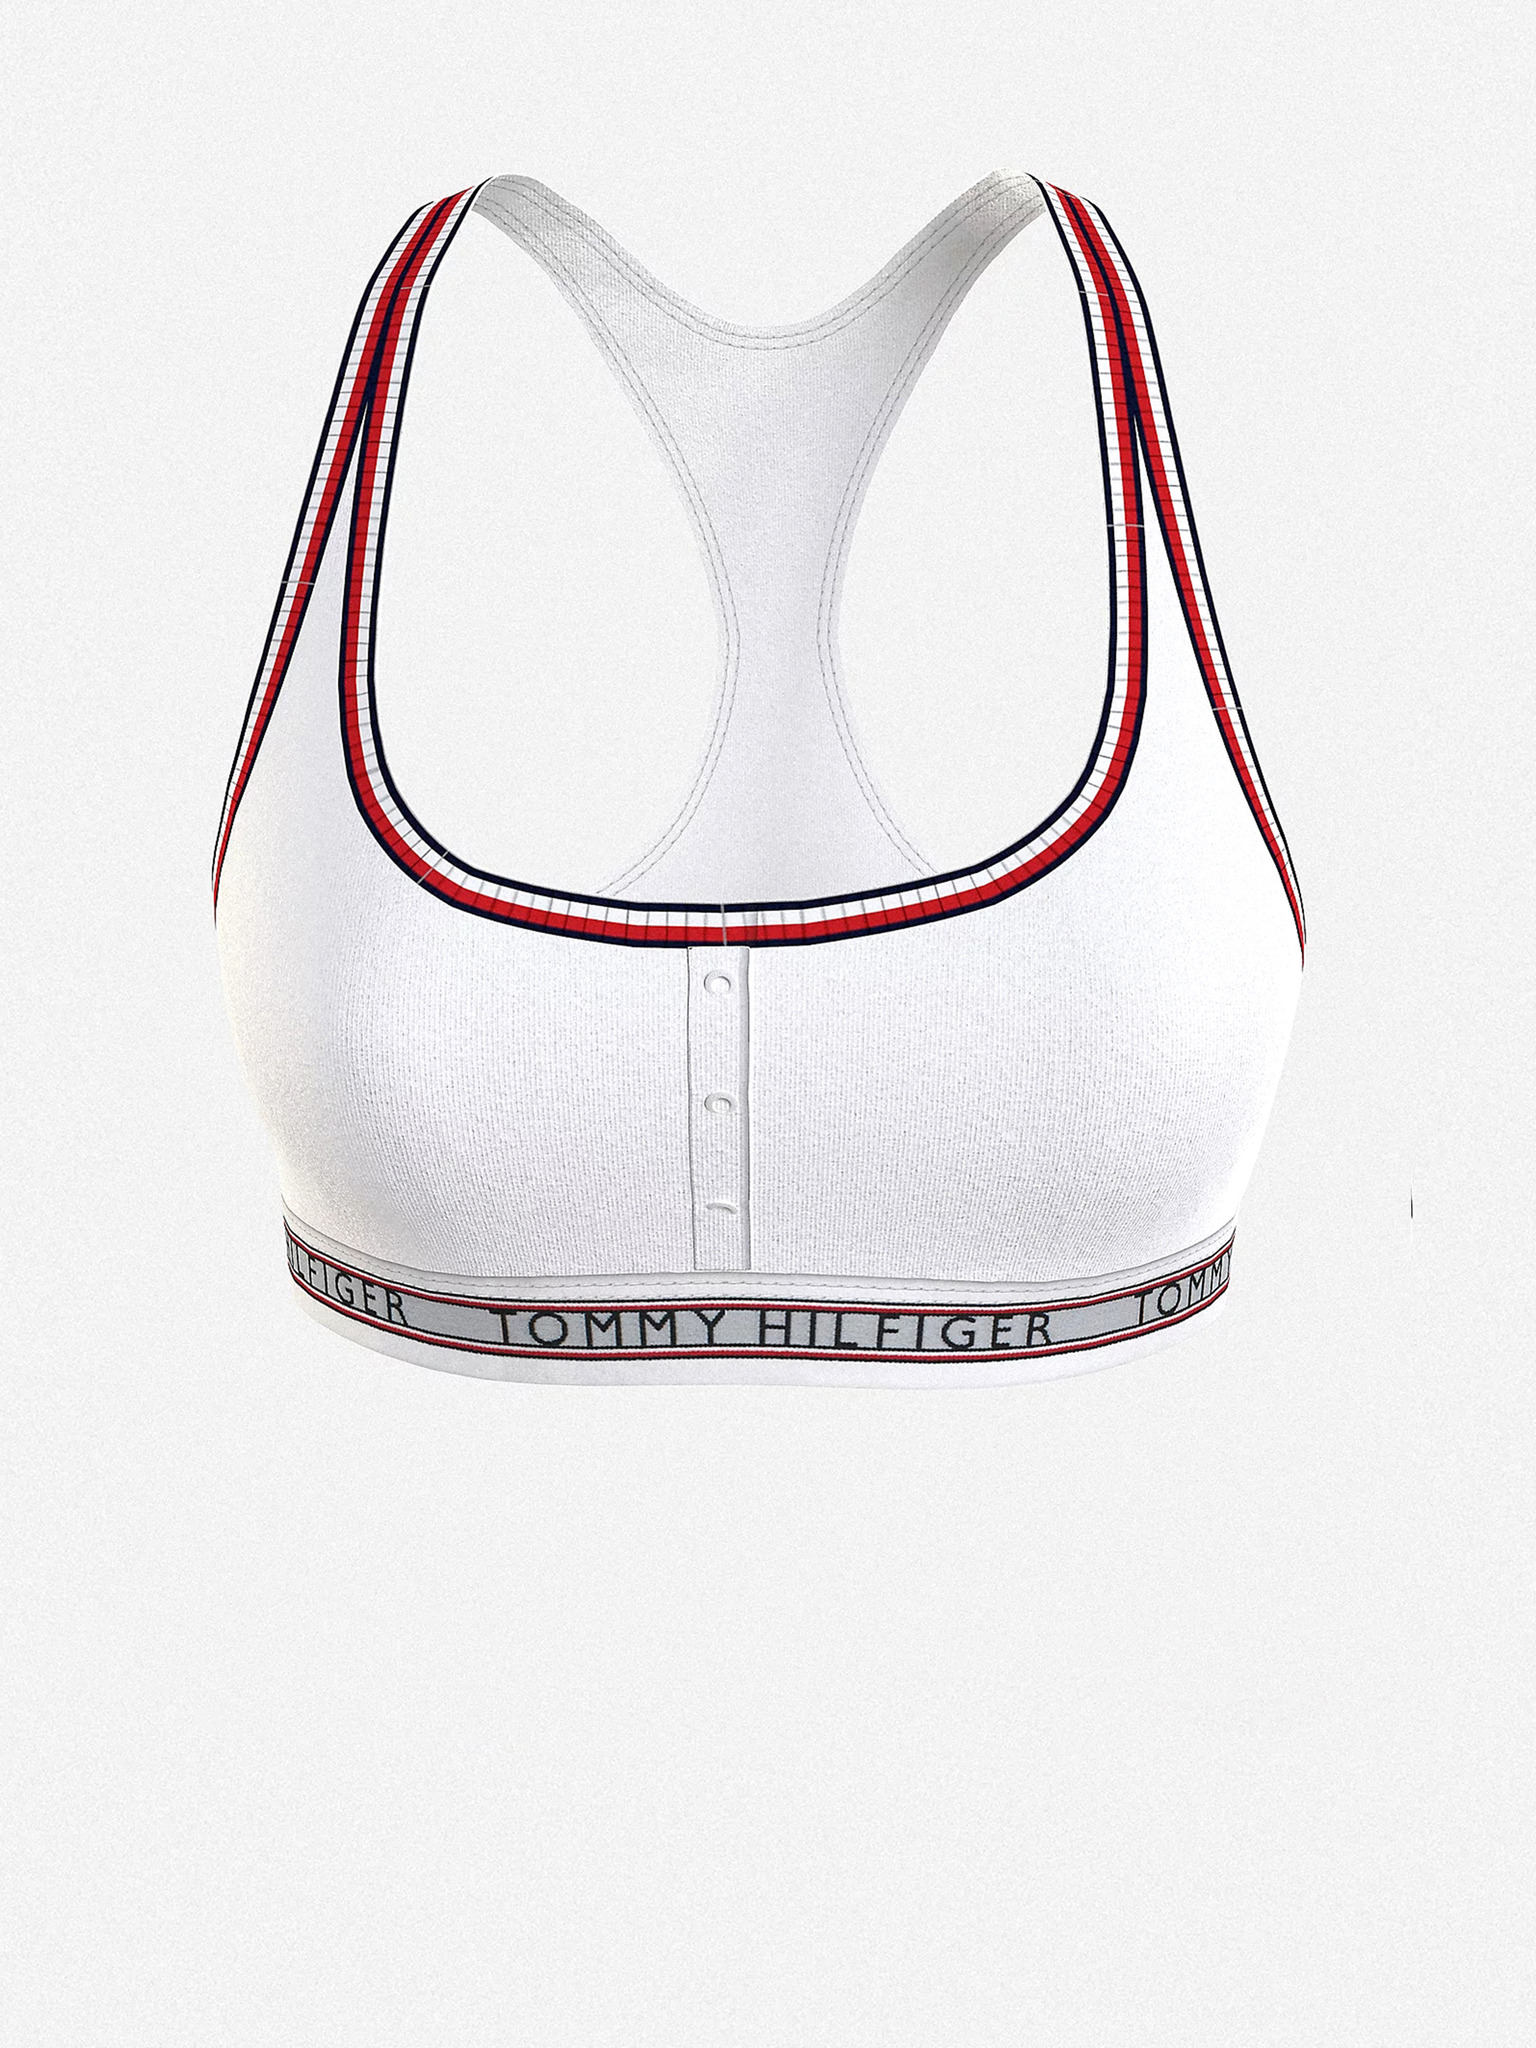 New Womens Tommy Hilfiger Sport Padded Sports Bra Size L  Black/Grey/Red/White